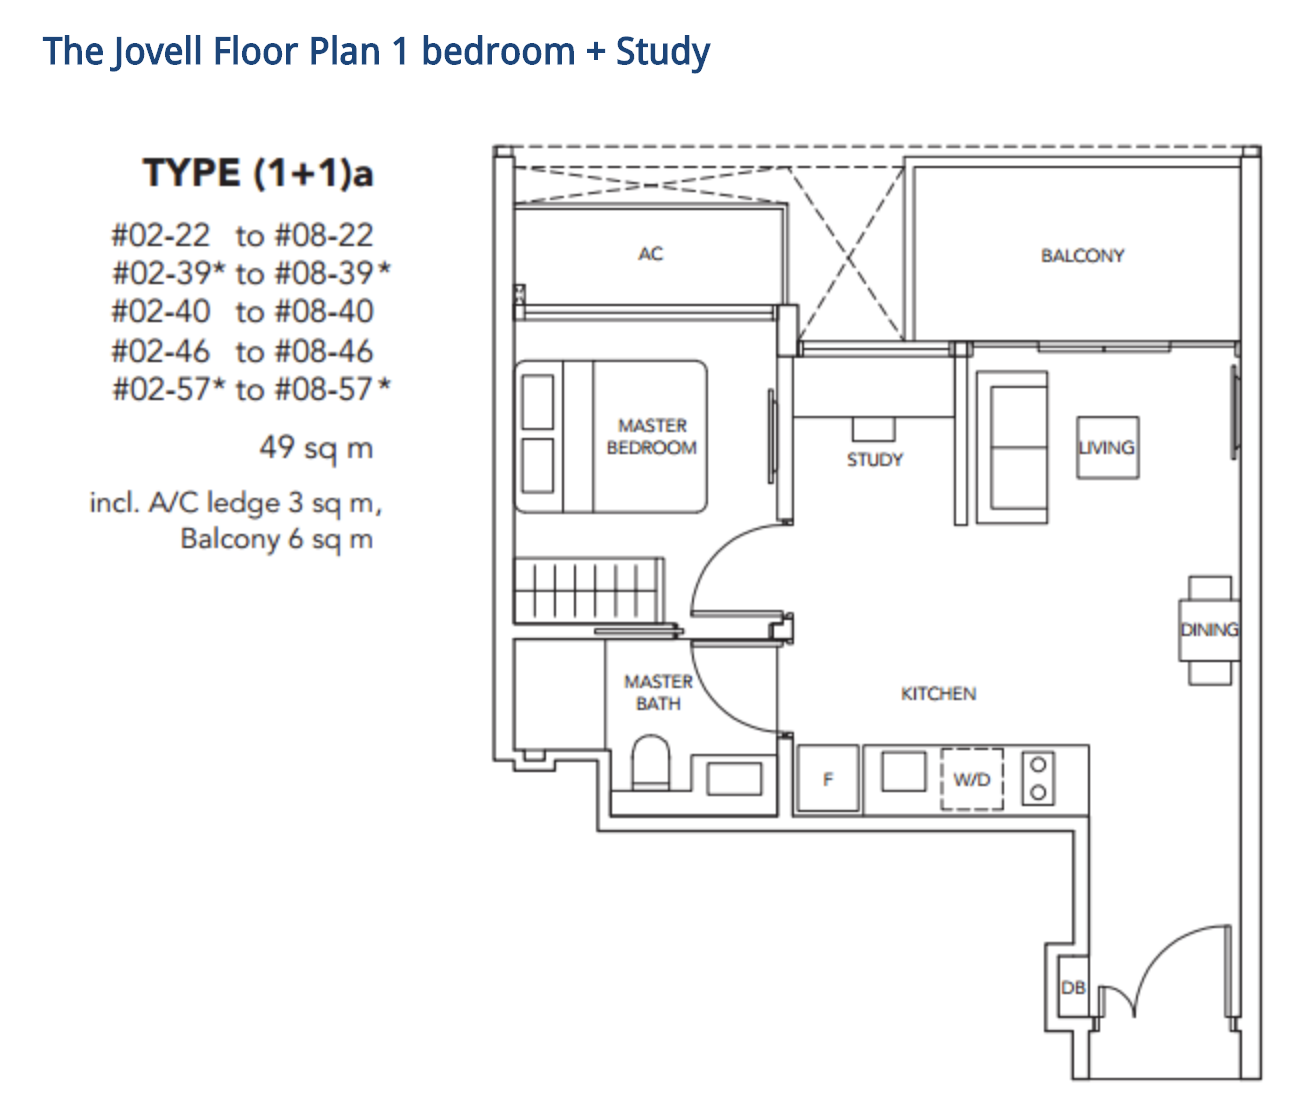 The Jovell Floor Plan 1 bedroom study